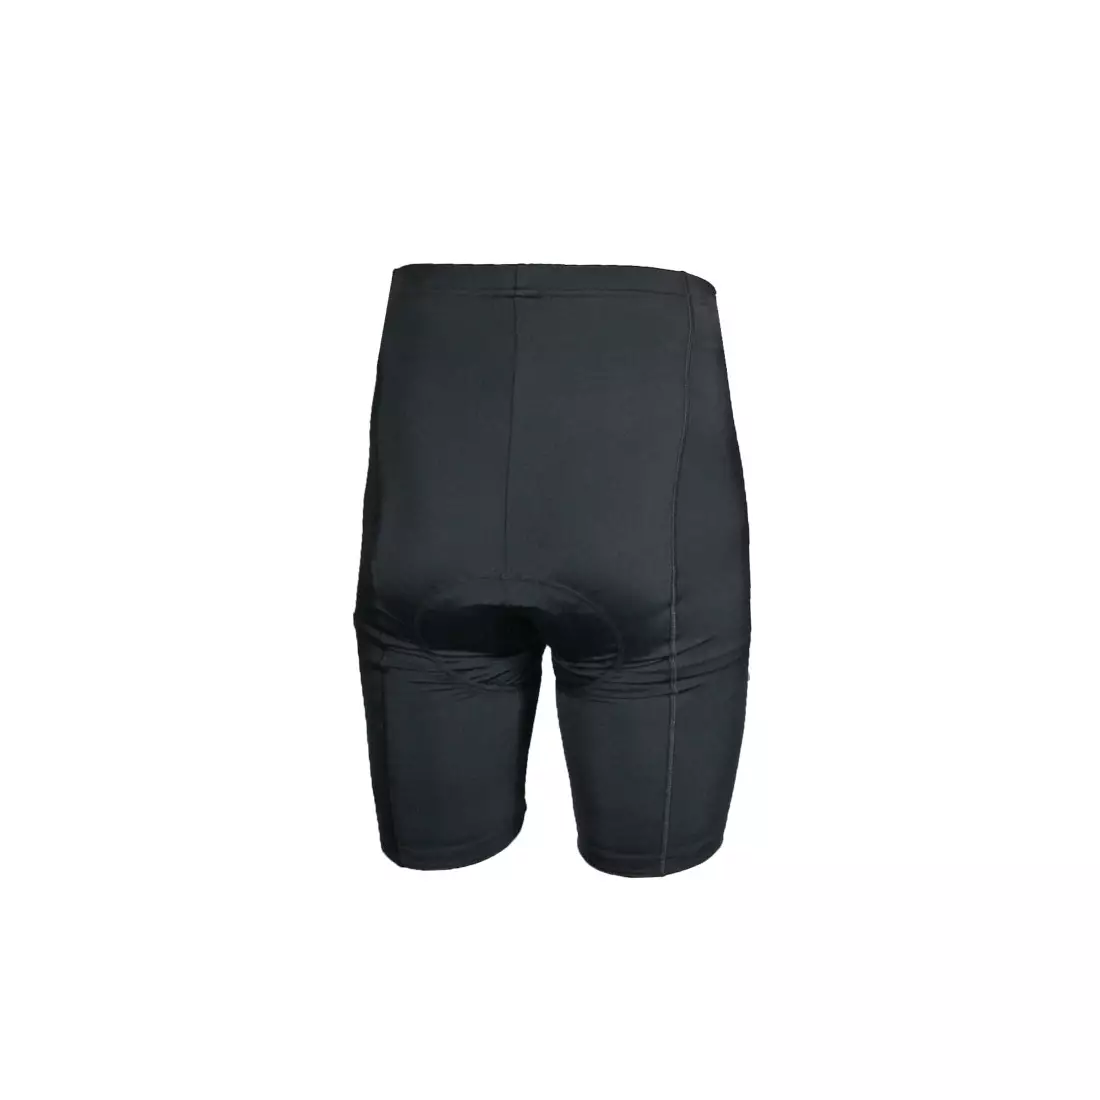 BIEMME SOUL - men's cycling shorts